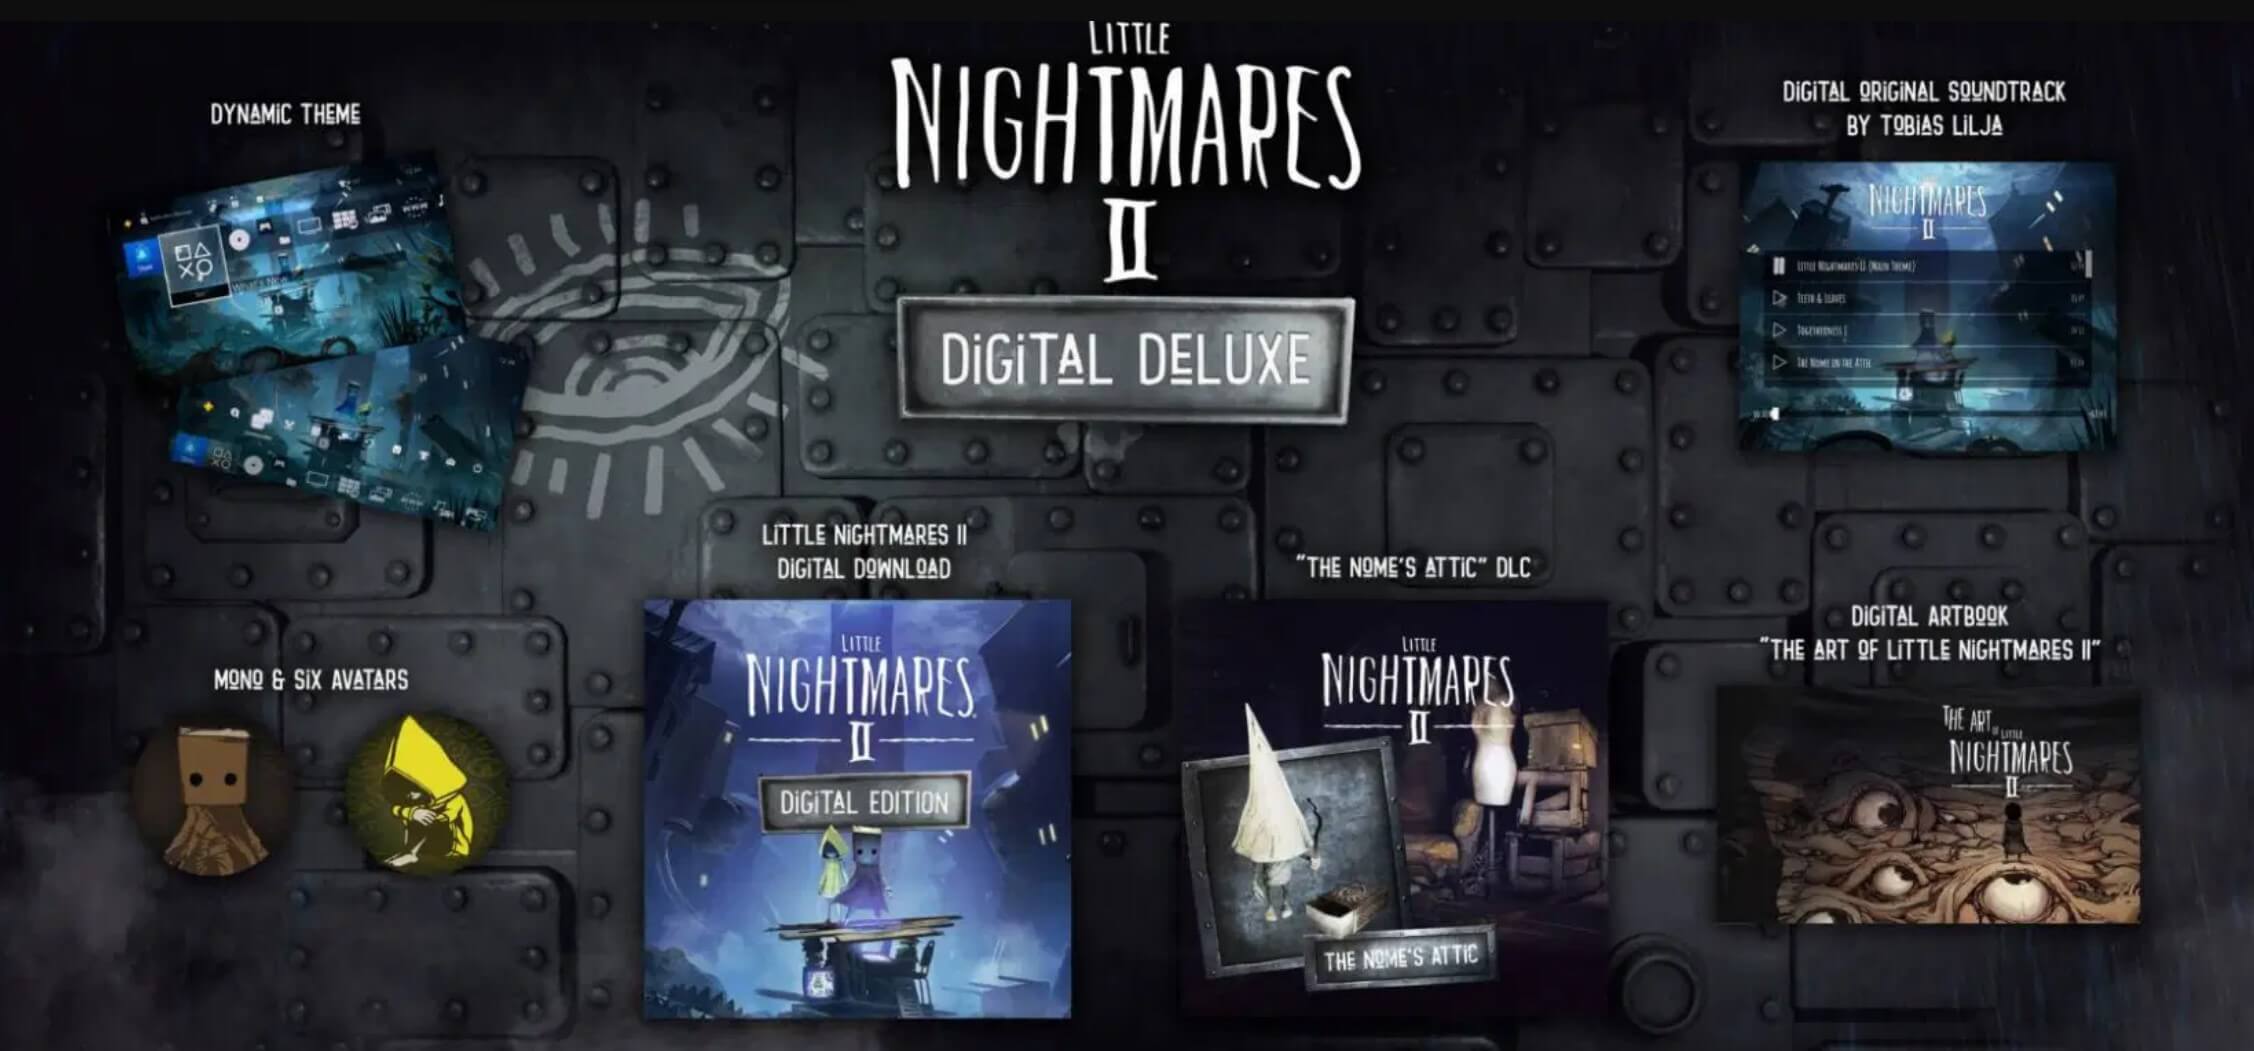 Little Nightmares Ii - Nintendo Switch (digital) : Target